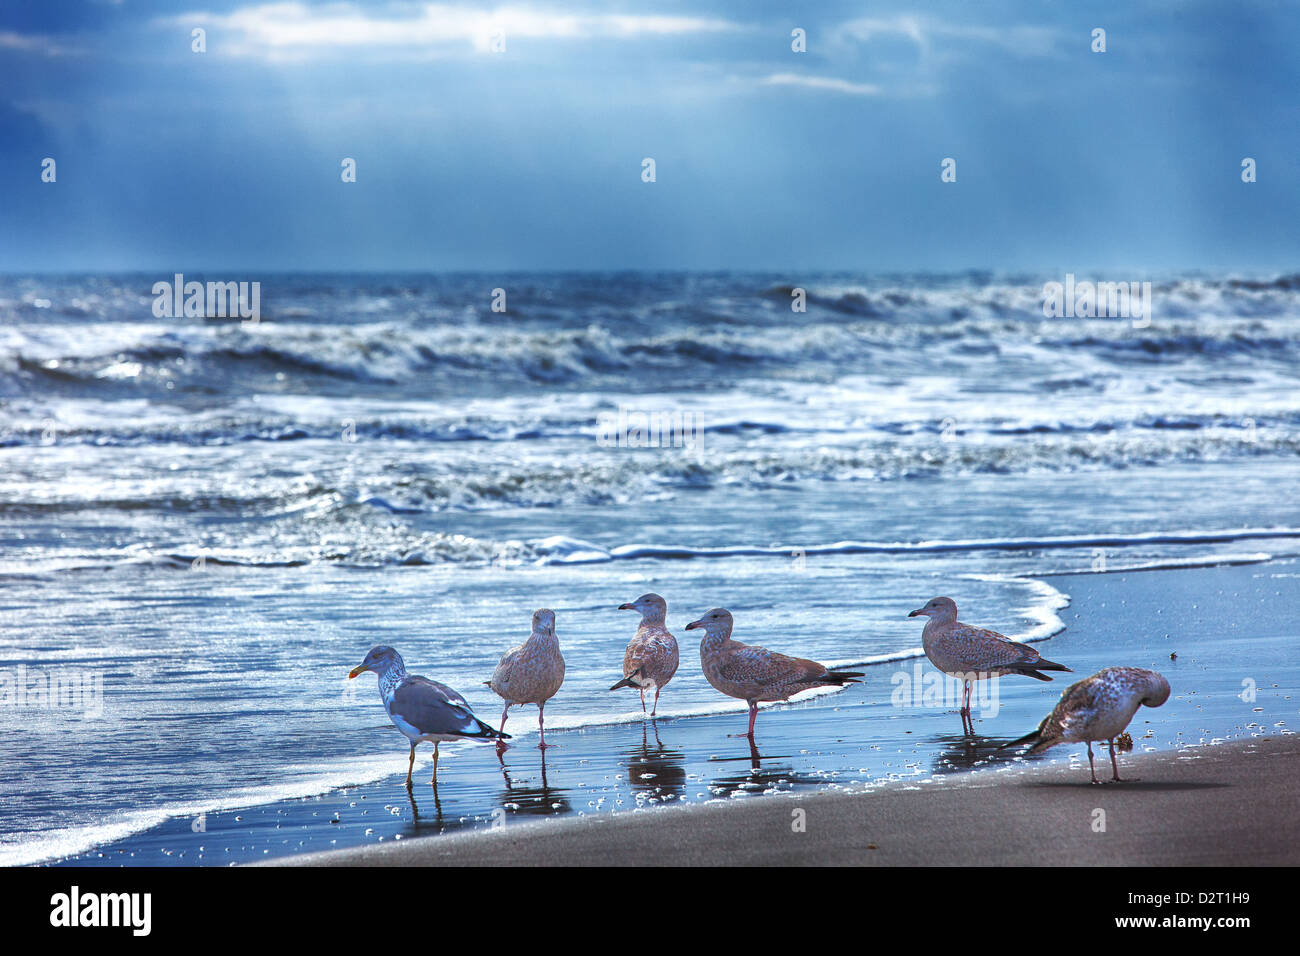 A flock of seagulls on the beach Stock Photo